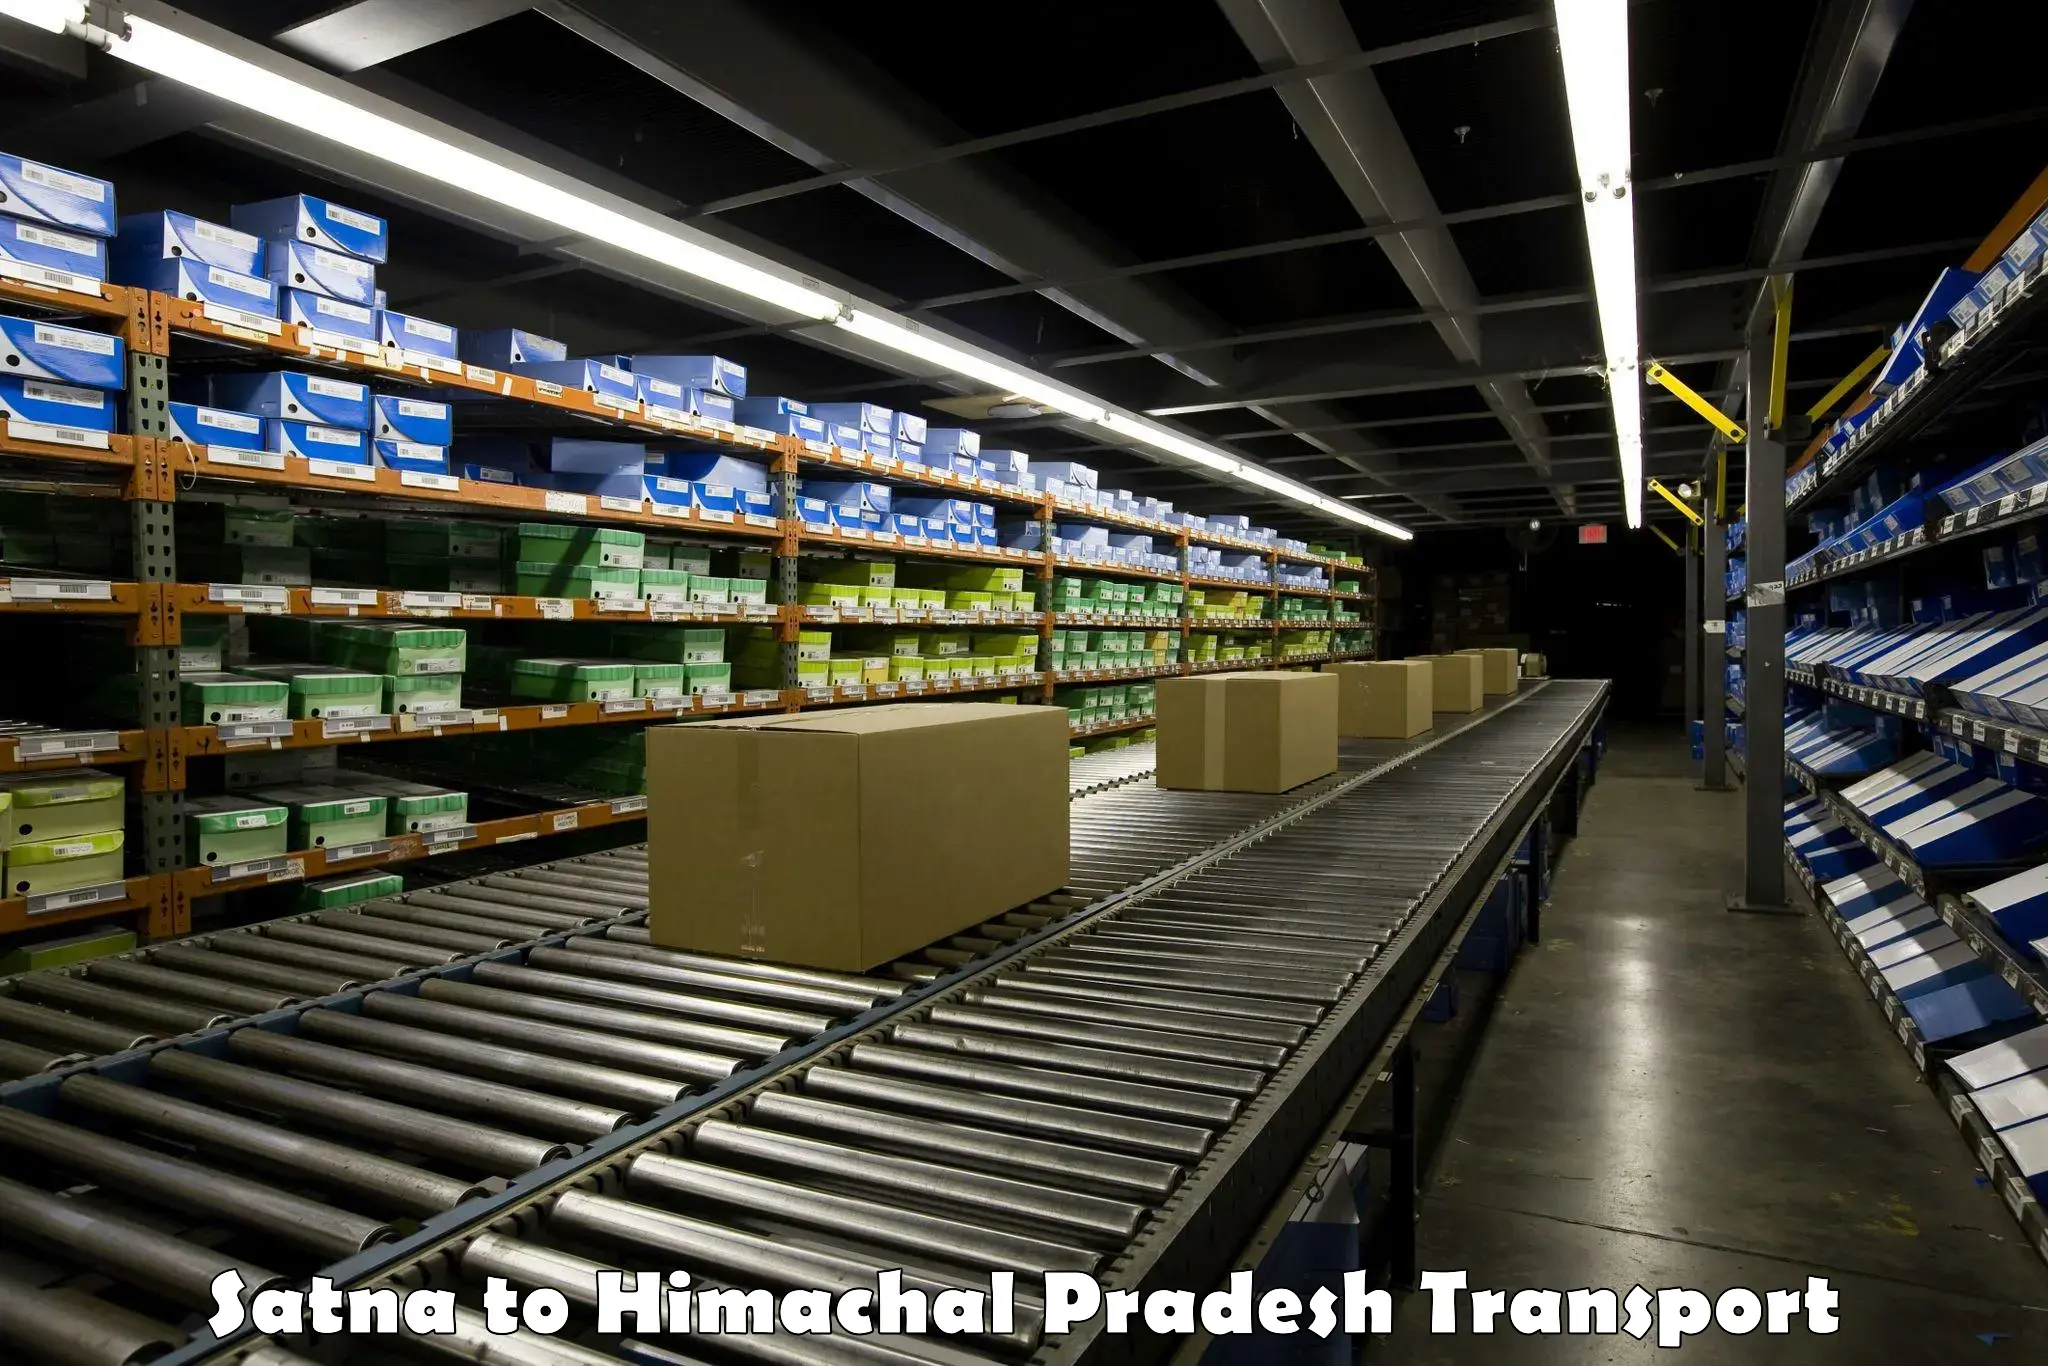 Truck transport companies in India in Satna to Joginder Nagar